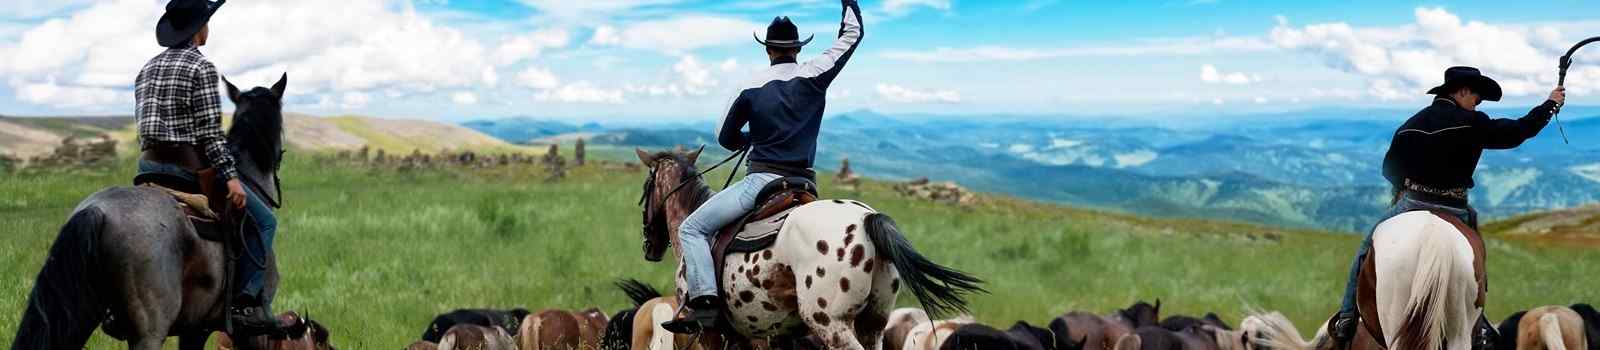 WILDCATTER-RANCH -3 Cowboys treiben Pferde